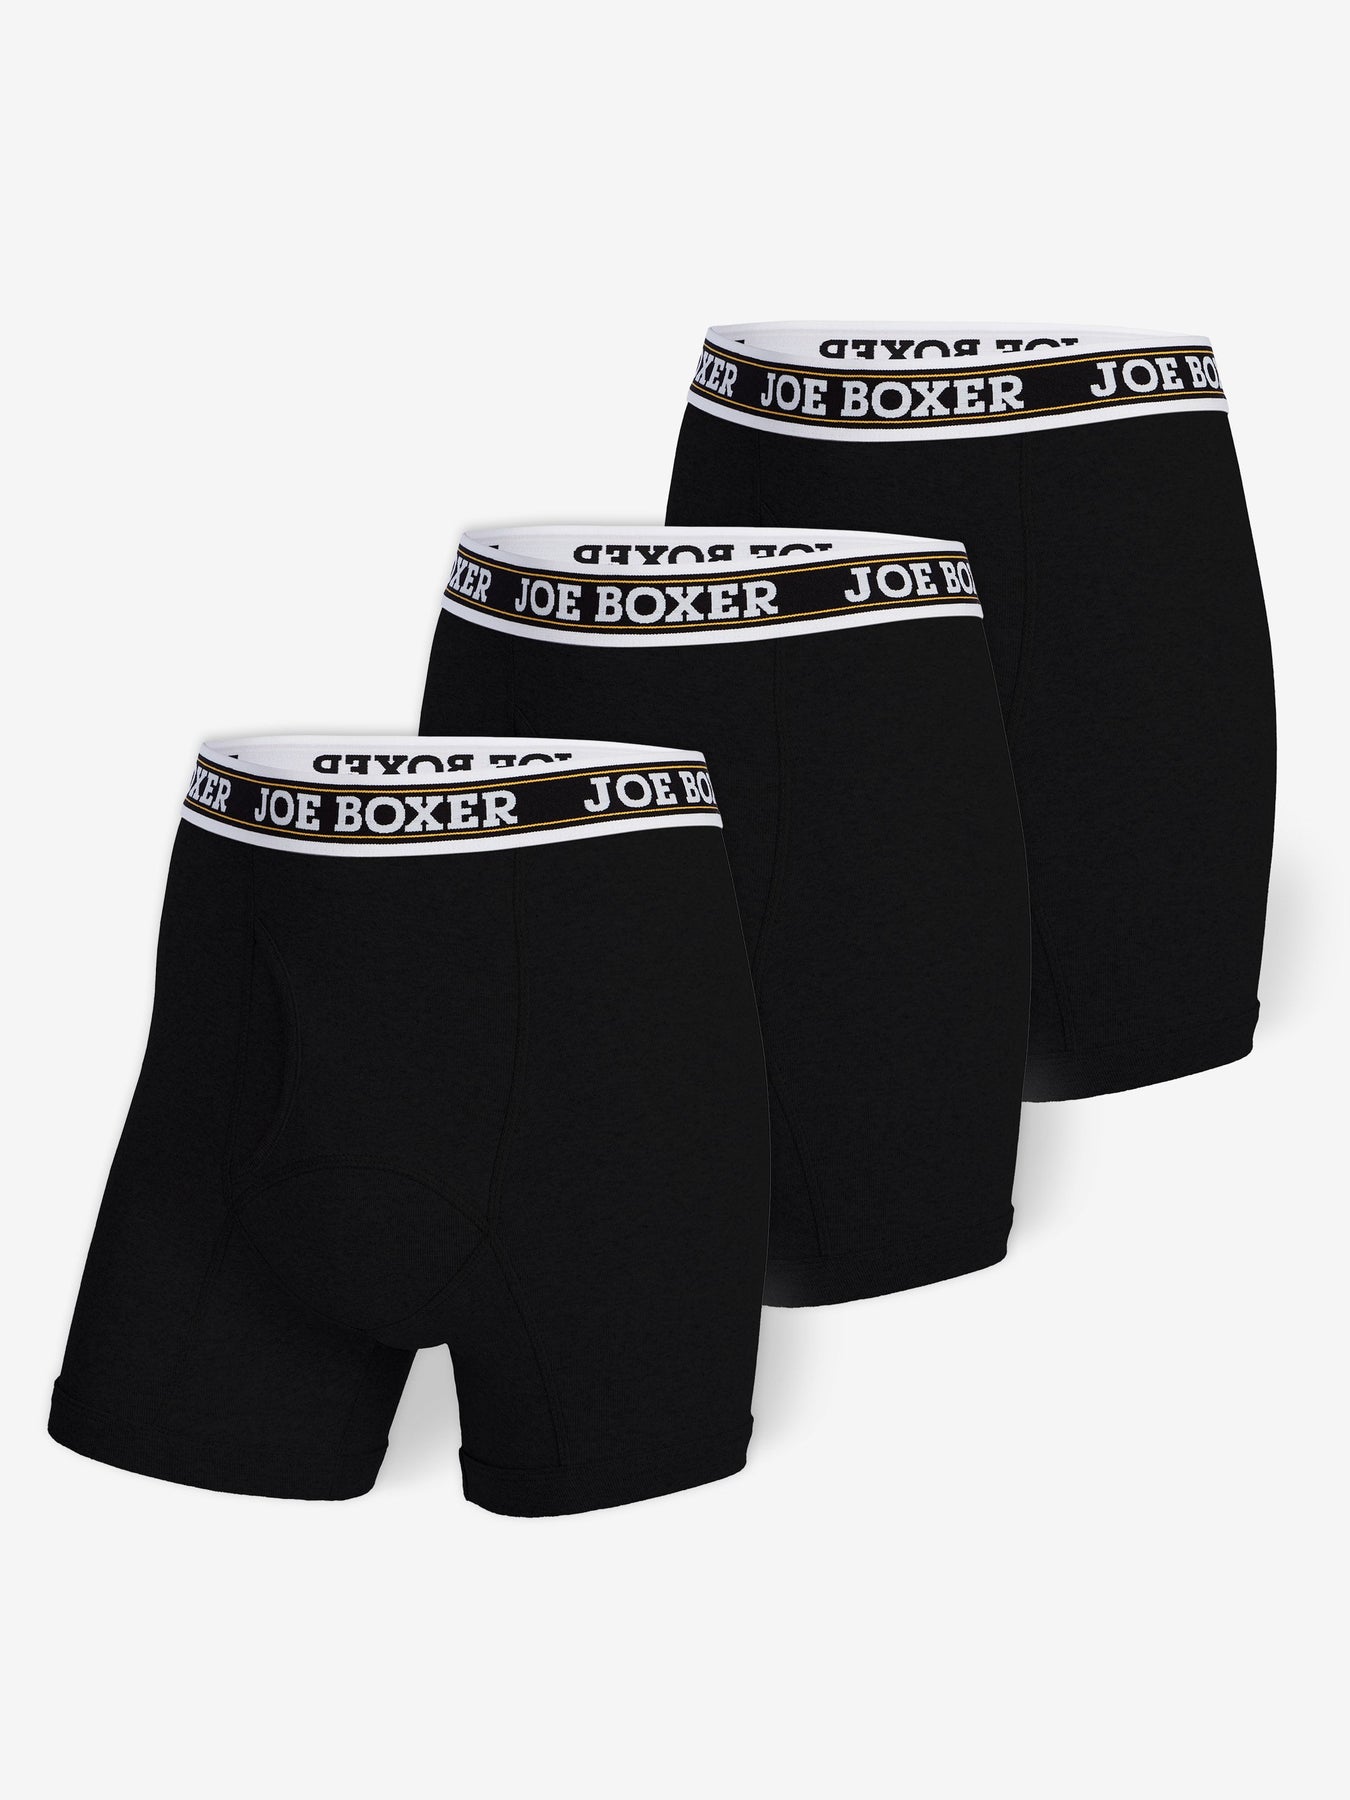 Play Underwear iBoxer in Black at International Jock